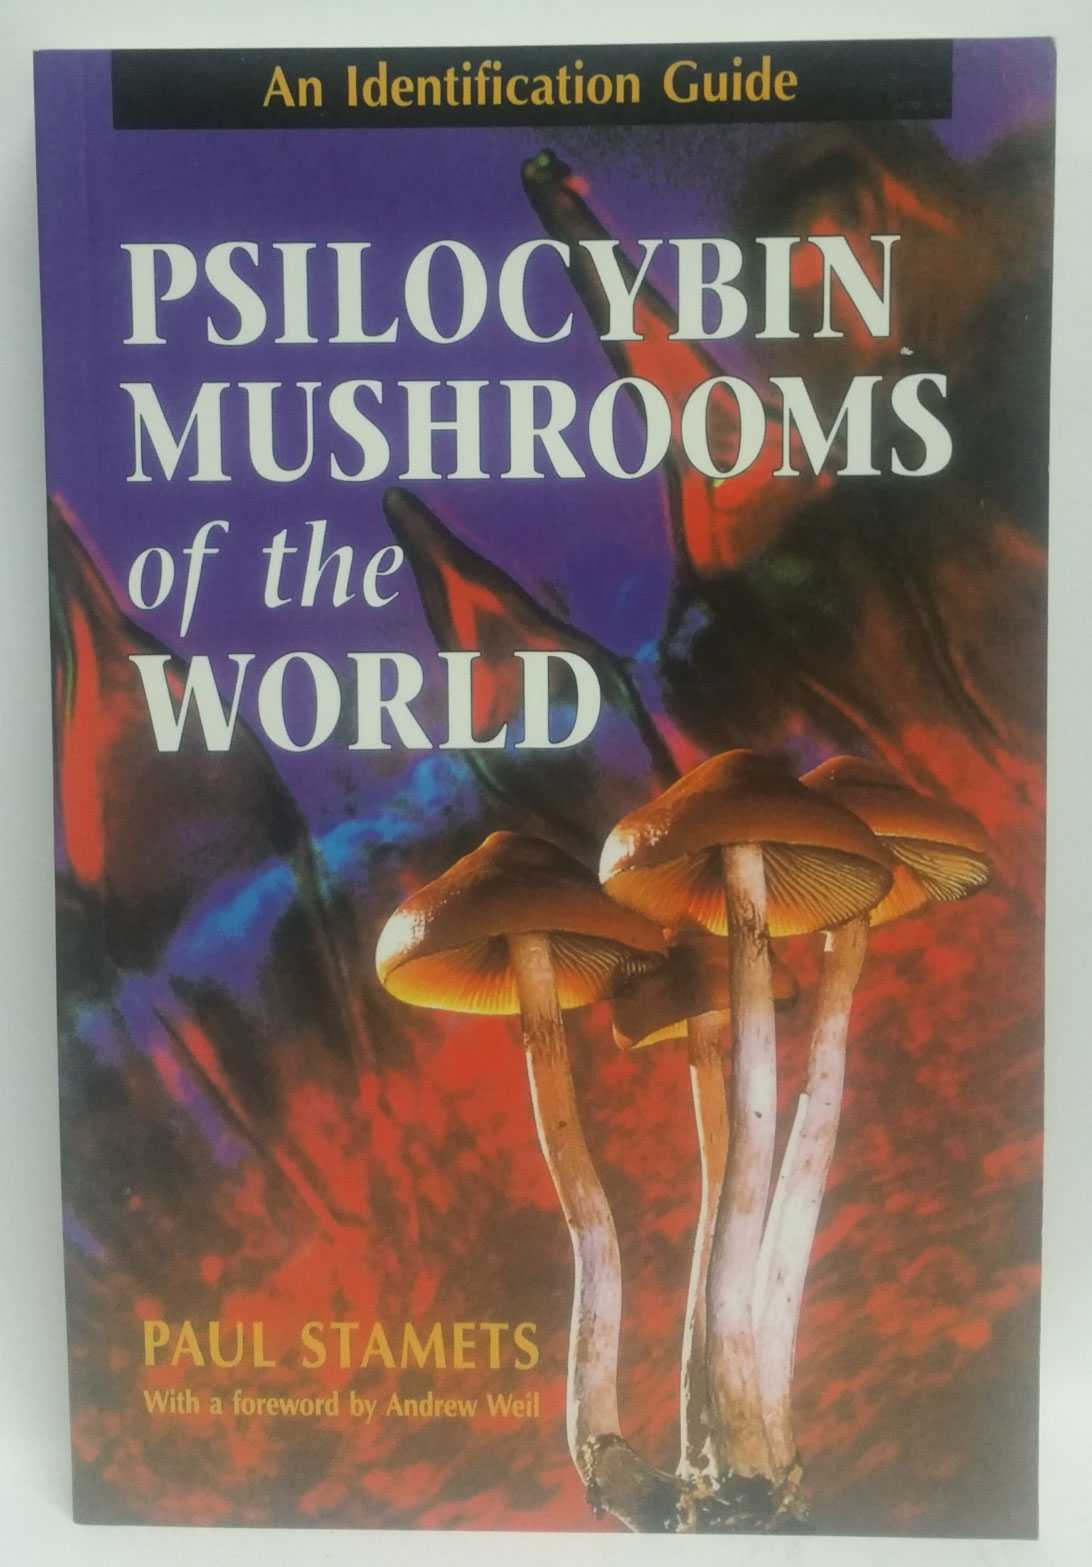 Paul Stamets - Psilocybin Mushrooms of the World: An Identification Guide